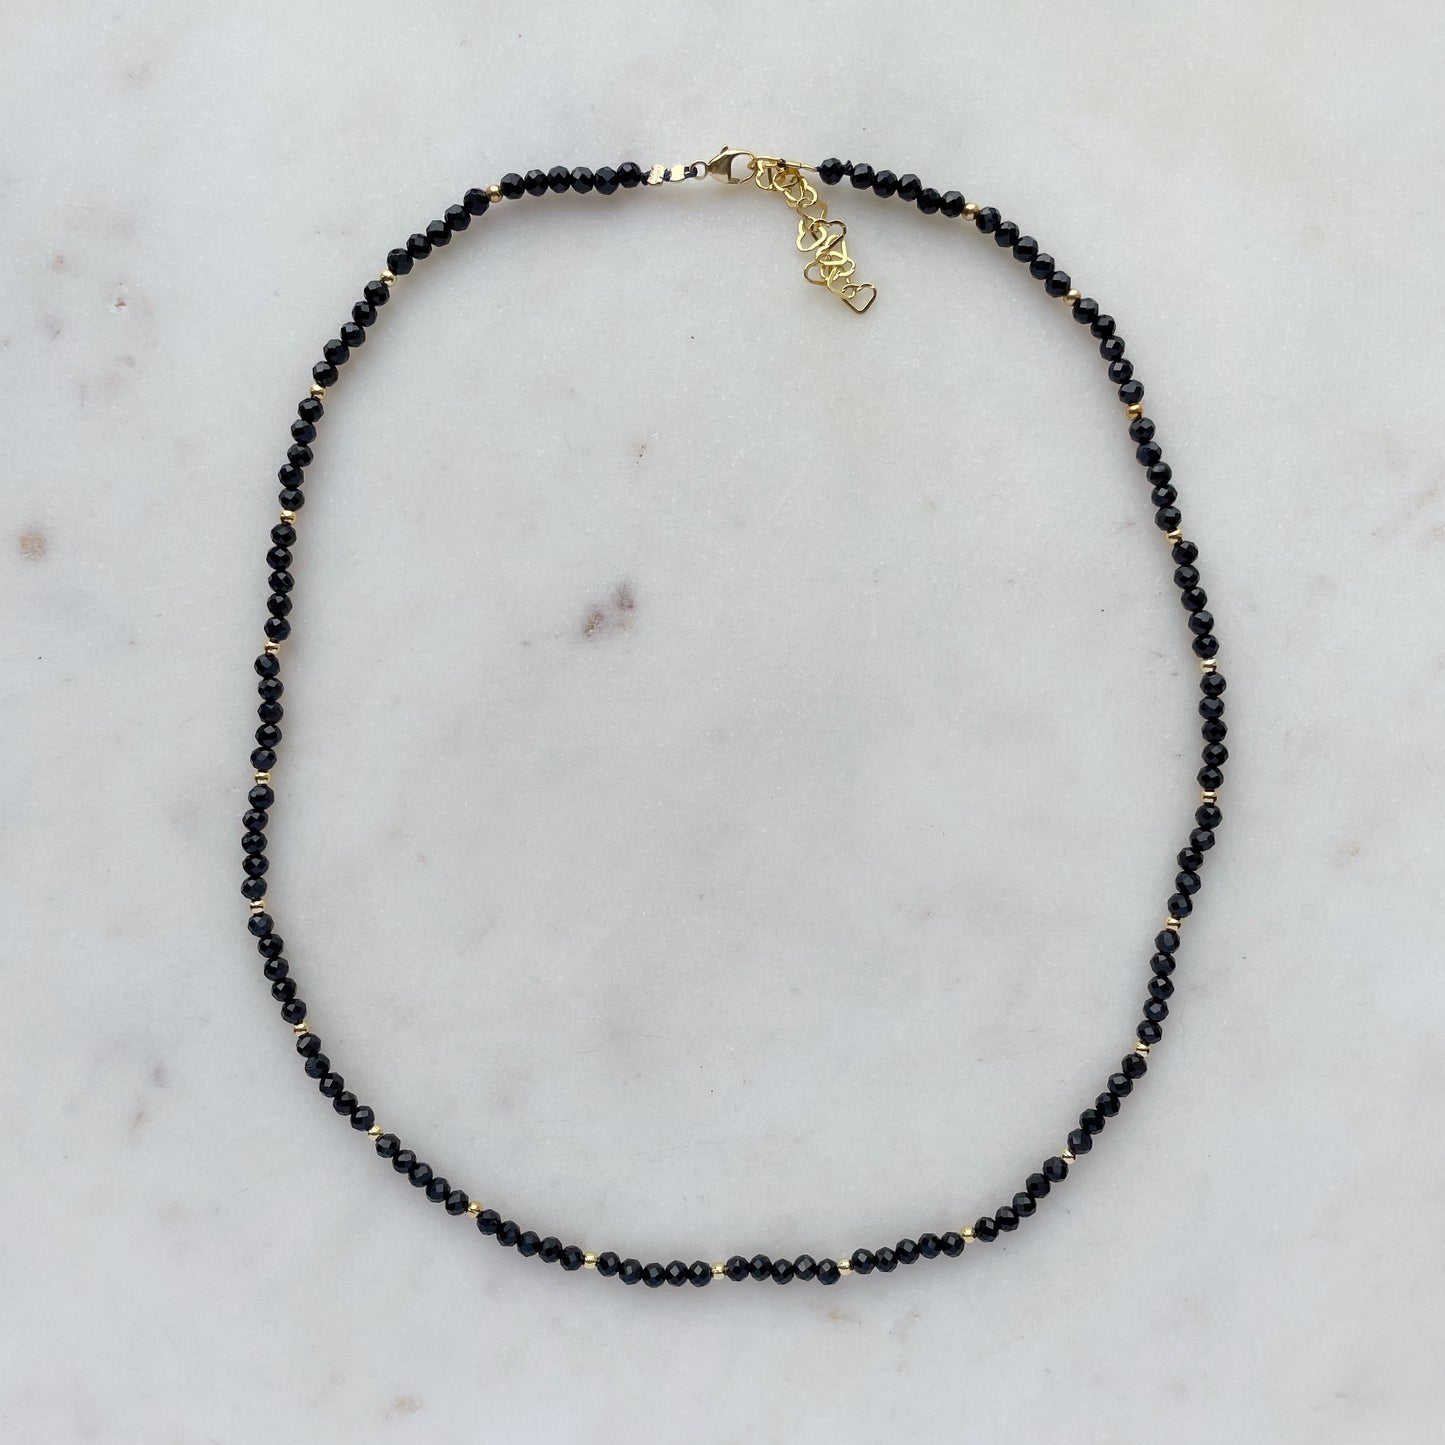 Black Tourmaline necklace